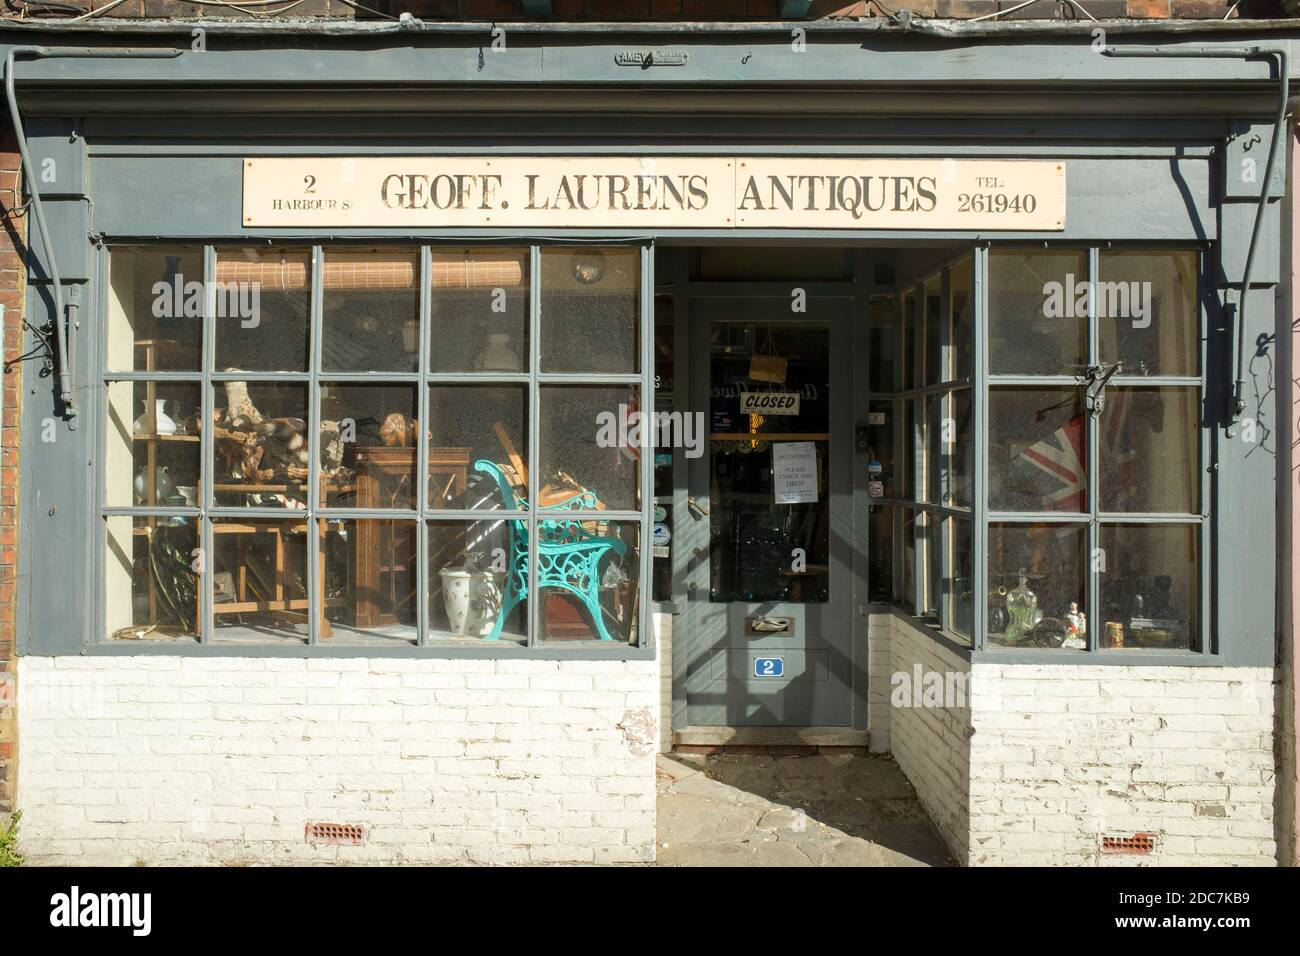 Negozio di antiquariato vittoriano Geoff Laurens Antiques Harbour Street Whitstable Kent Regno Unito Foto Stock